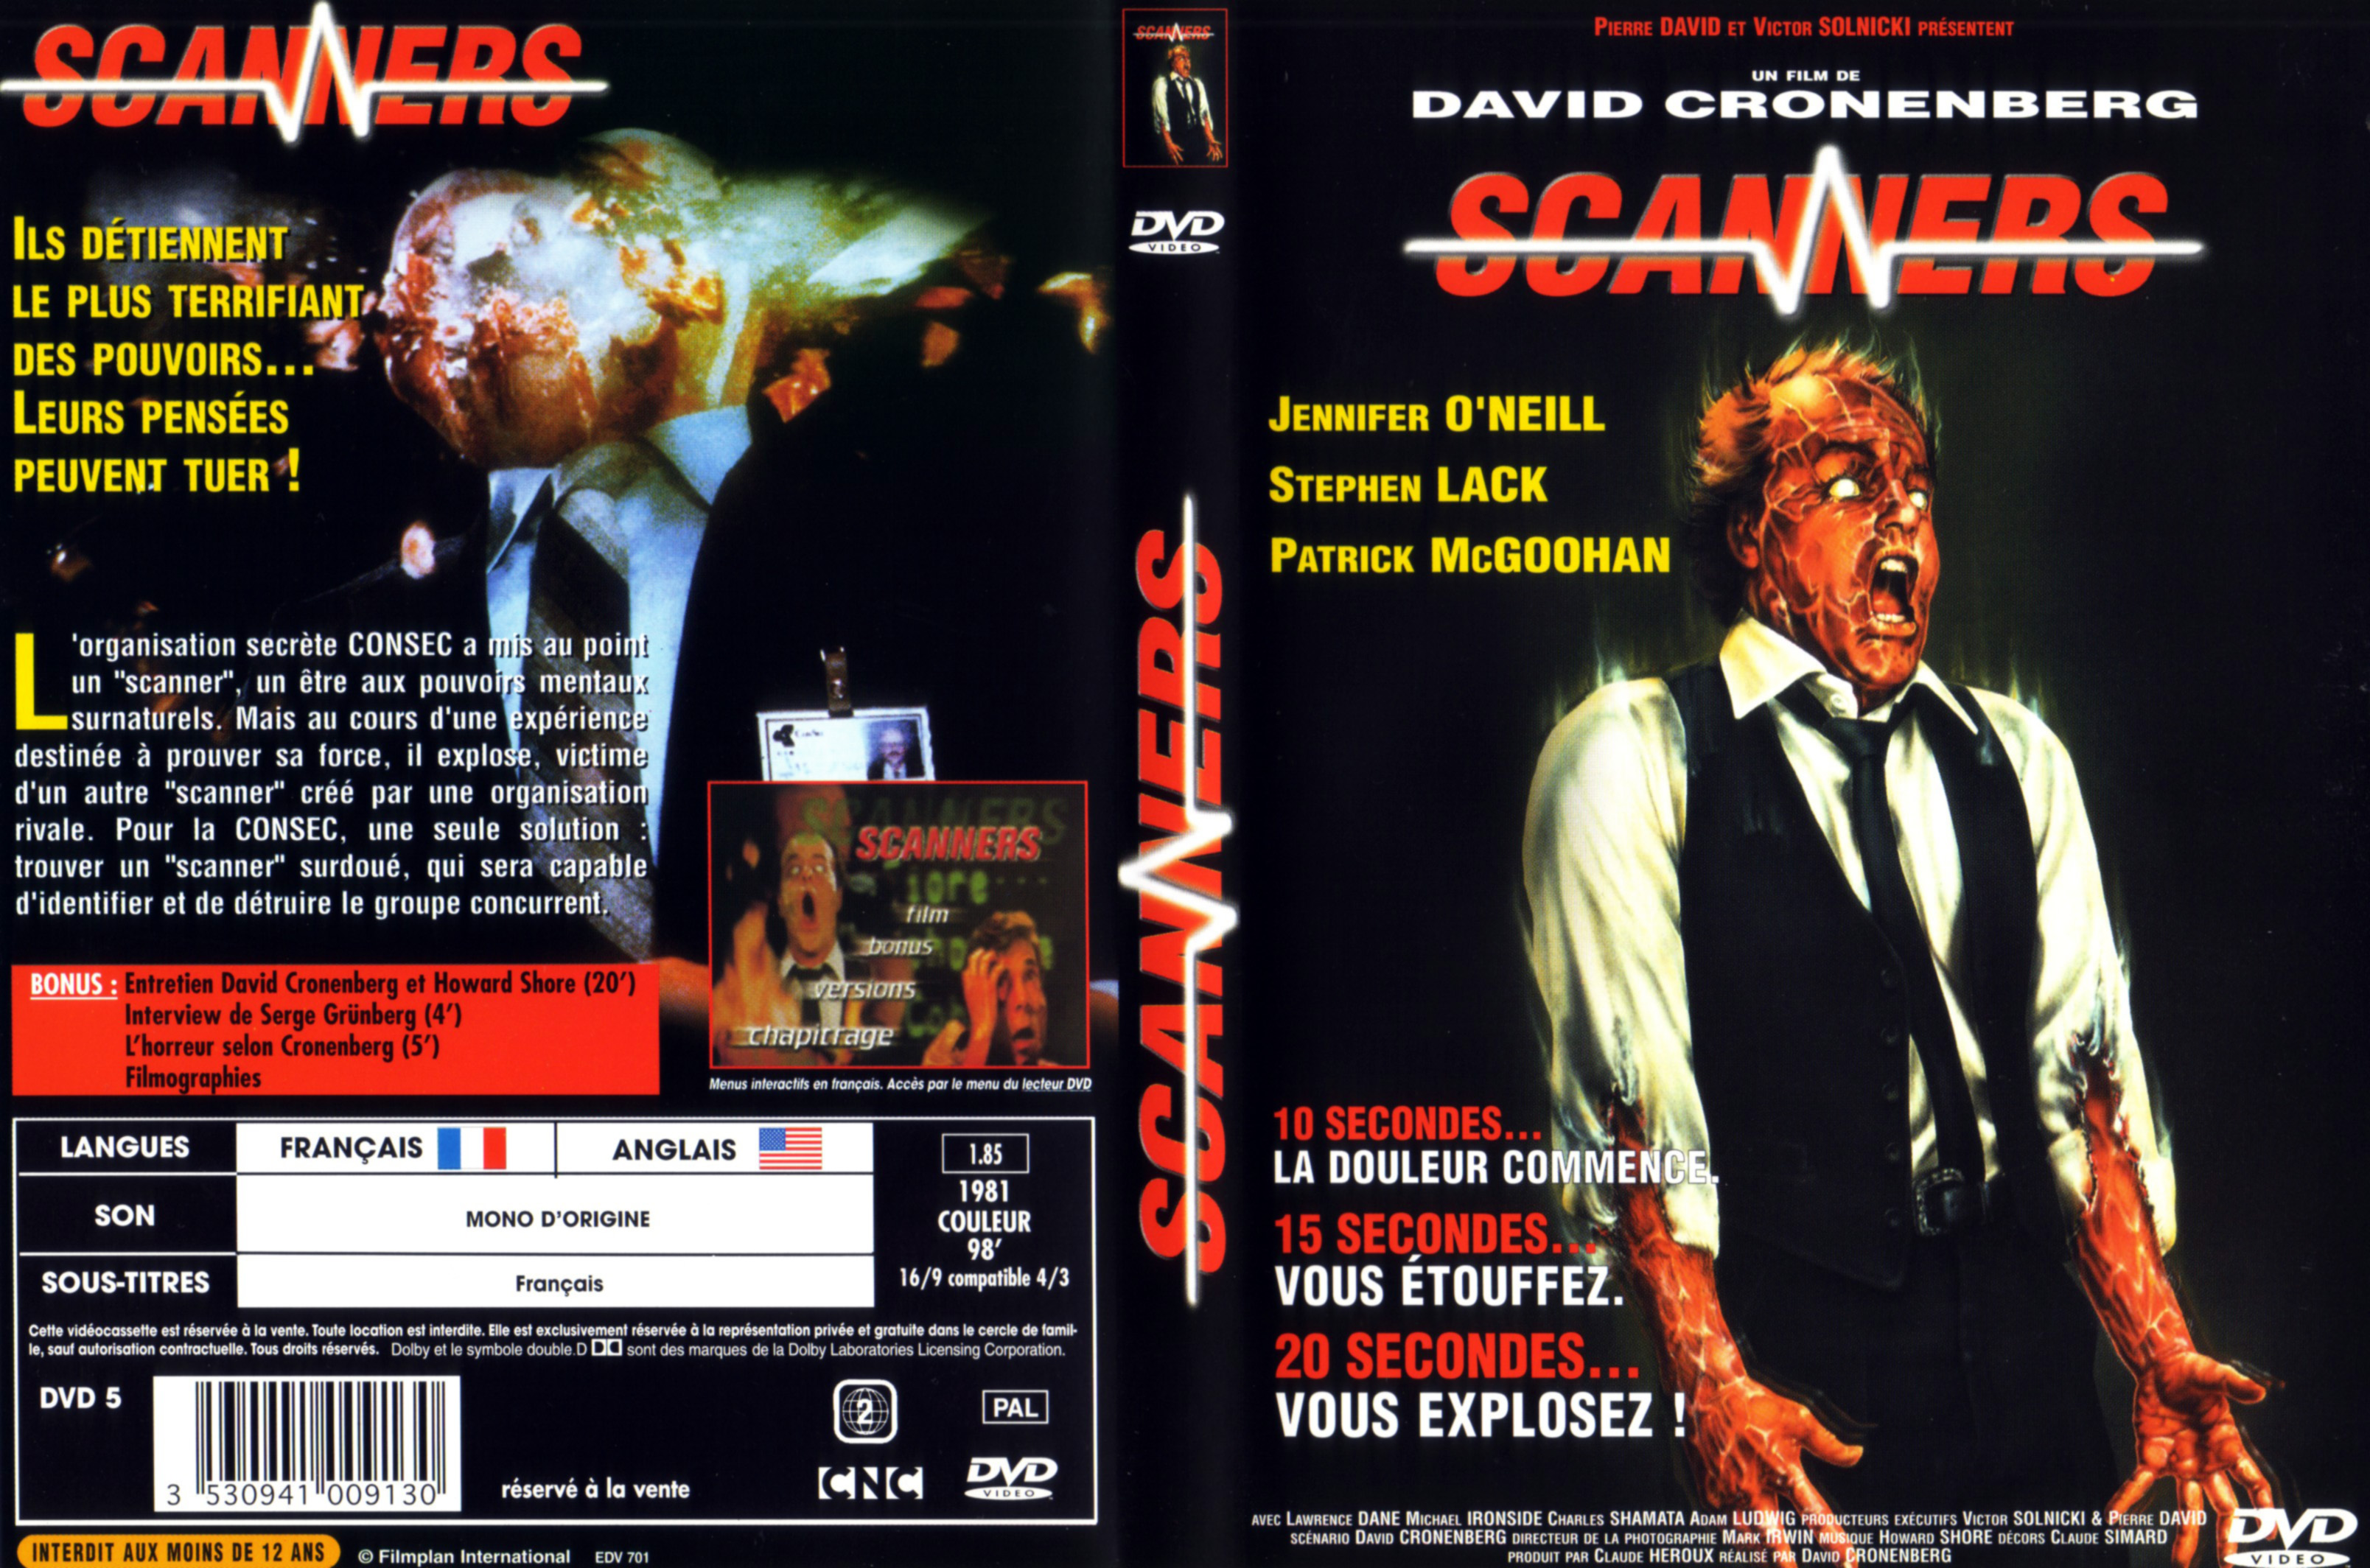 Jaquette DVD Scanners v3